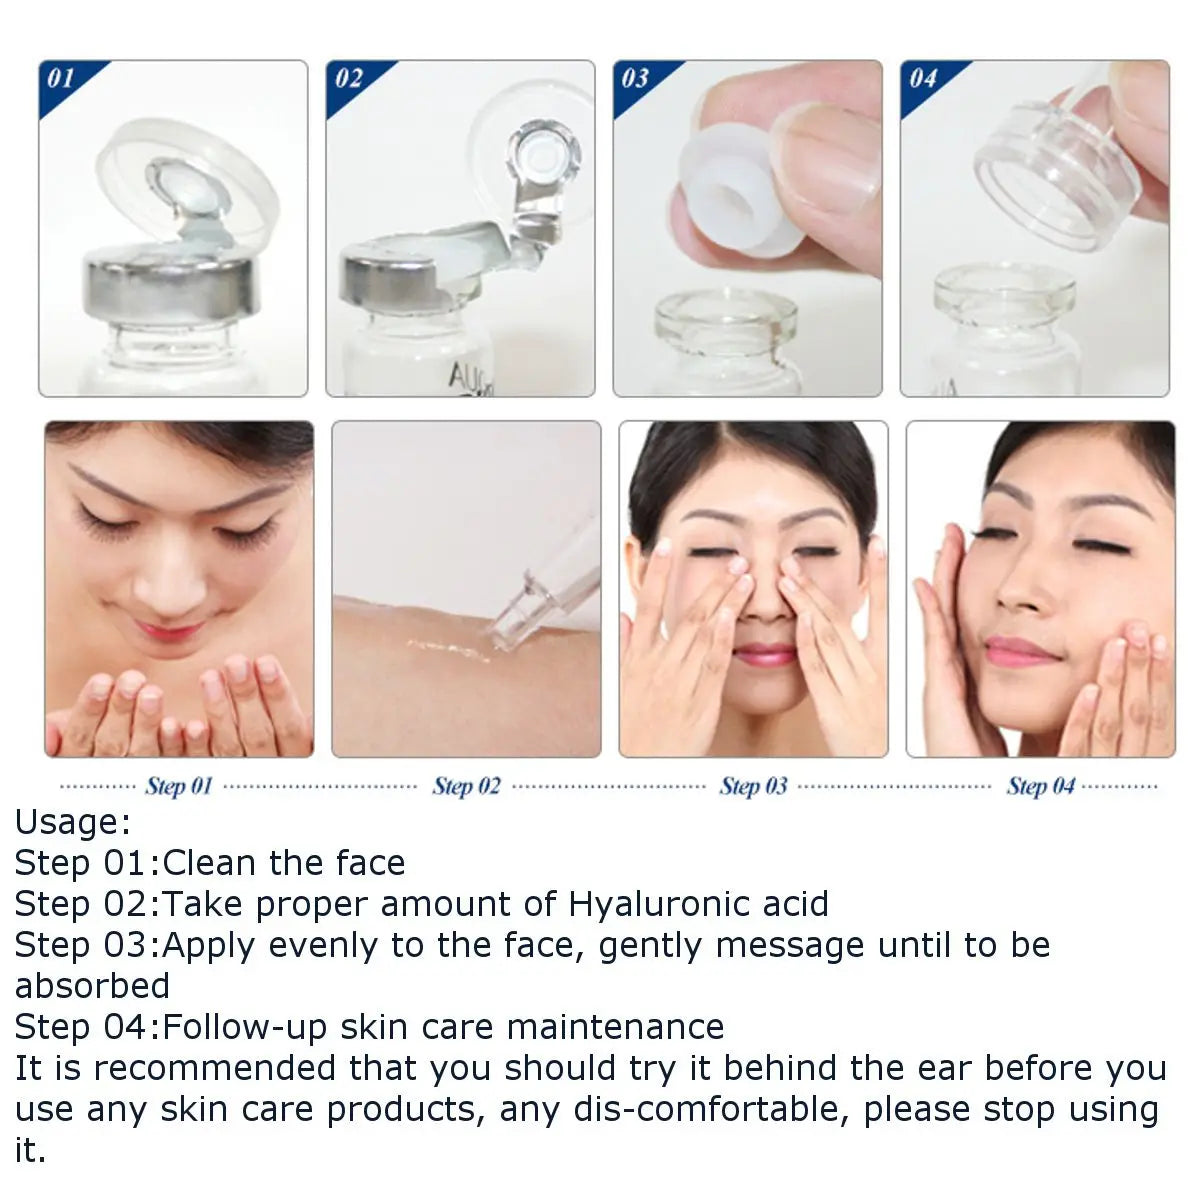 10PCS/Set Hyaluronic Acid Serum Moisturizing Vitamins E Facial Moisturizing Anti Wrinkle Aging Collagen Essence